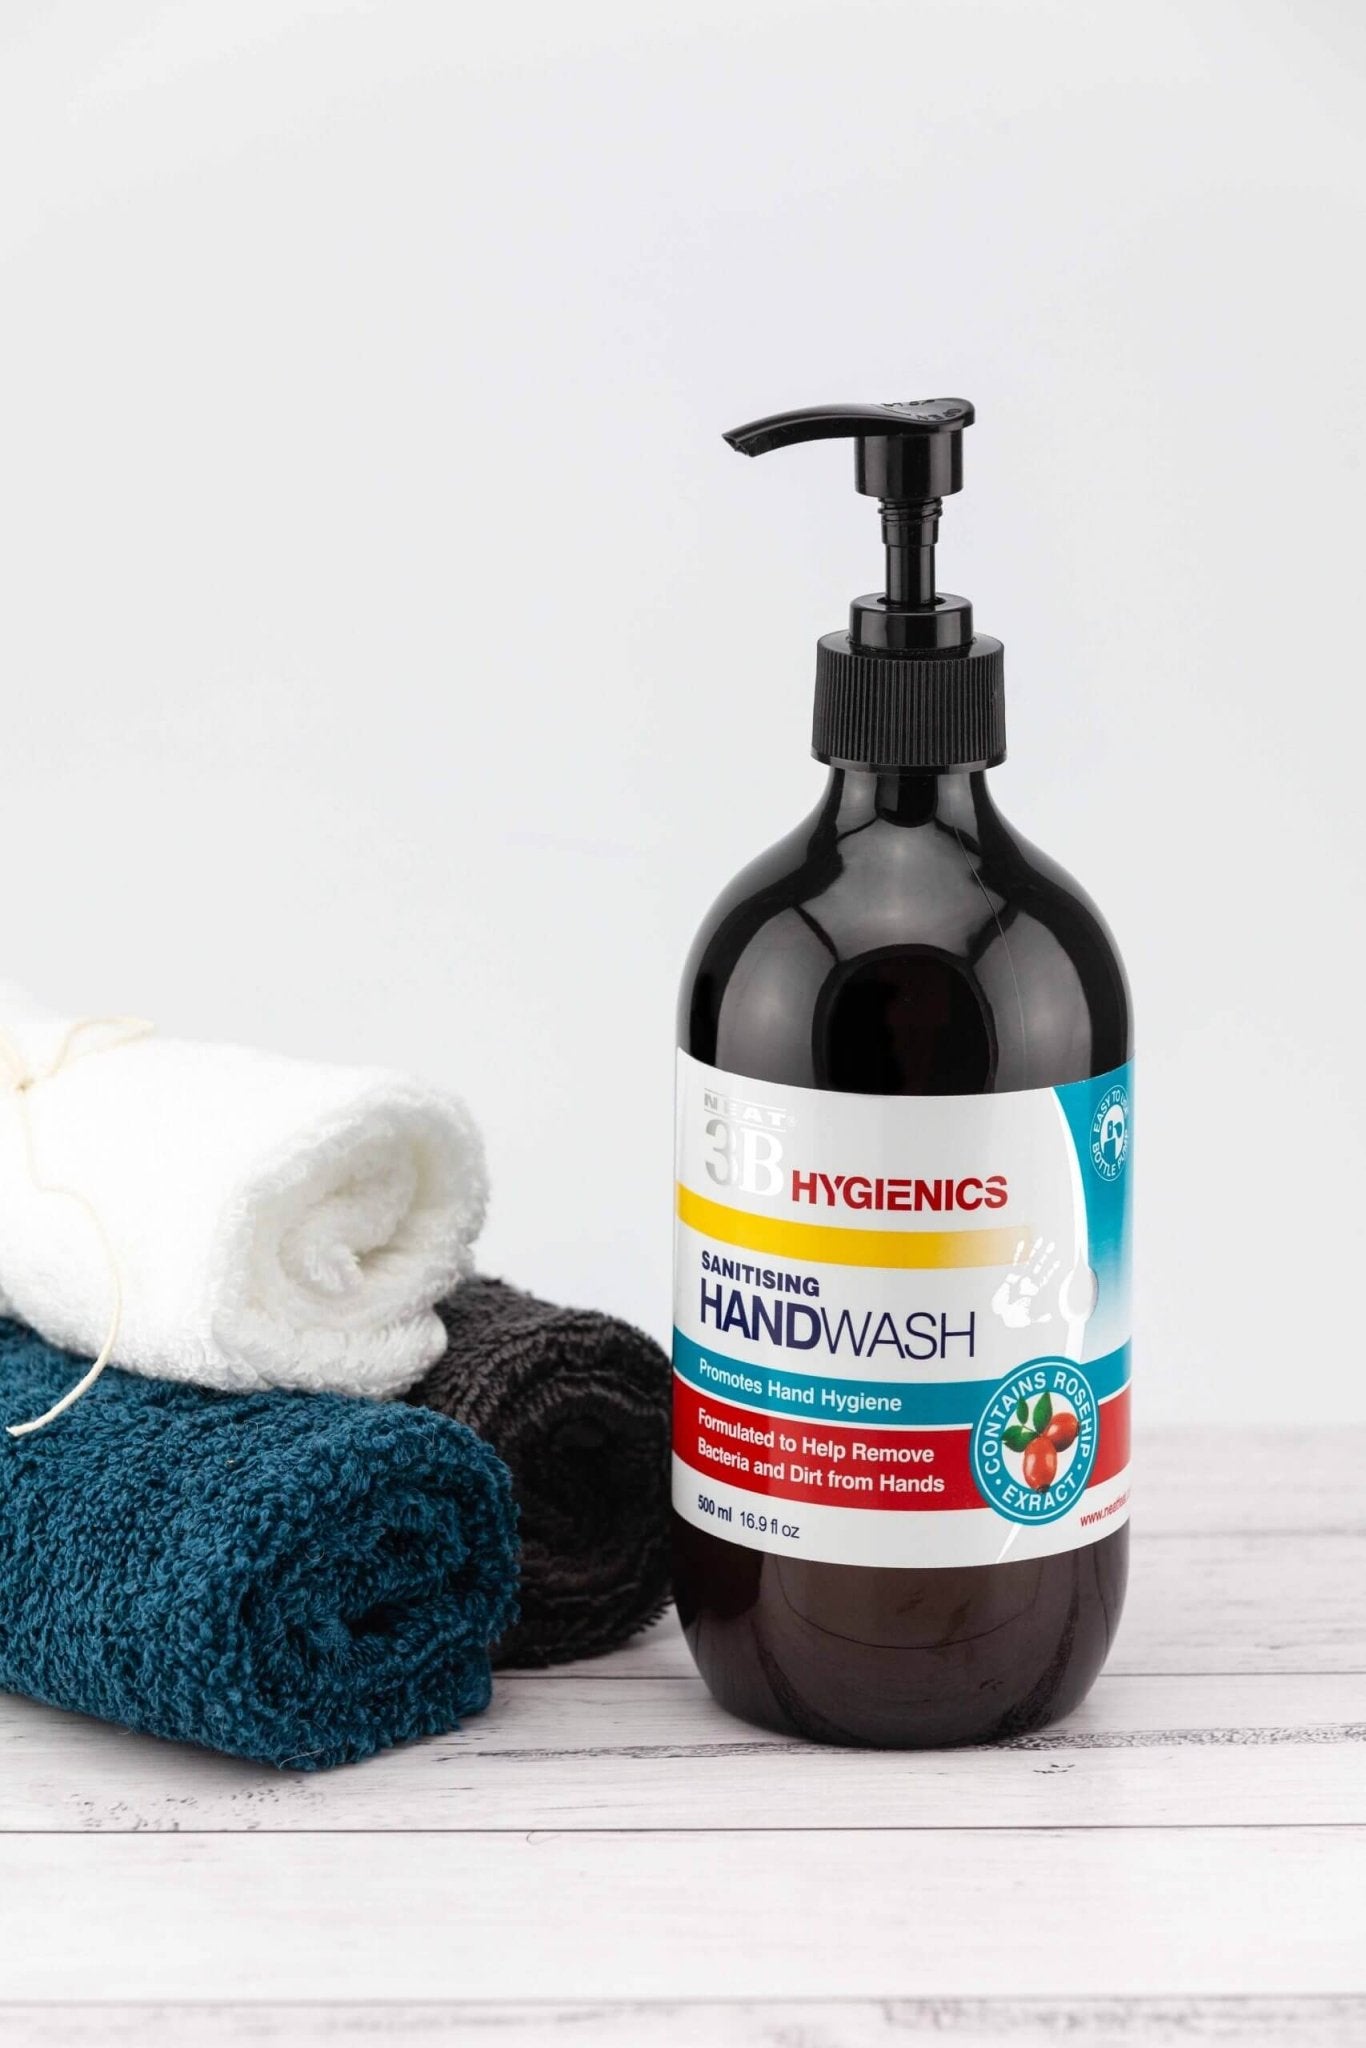 Hygienics Sanitising Handwash 500ml Antibacterial Soap - Neat Feat Foot & Body Care